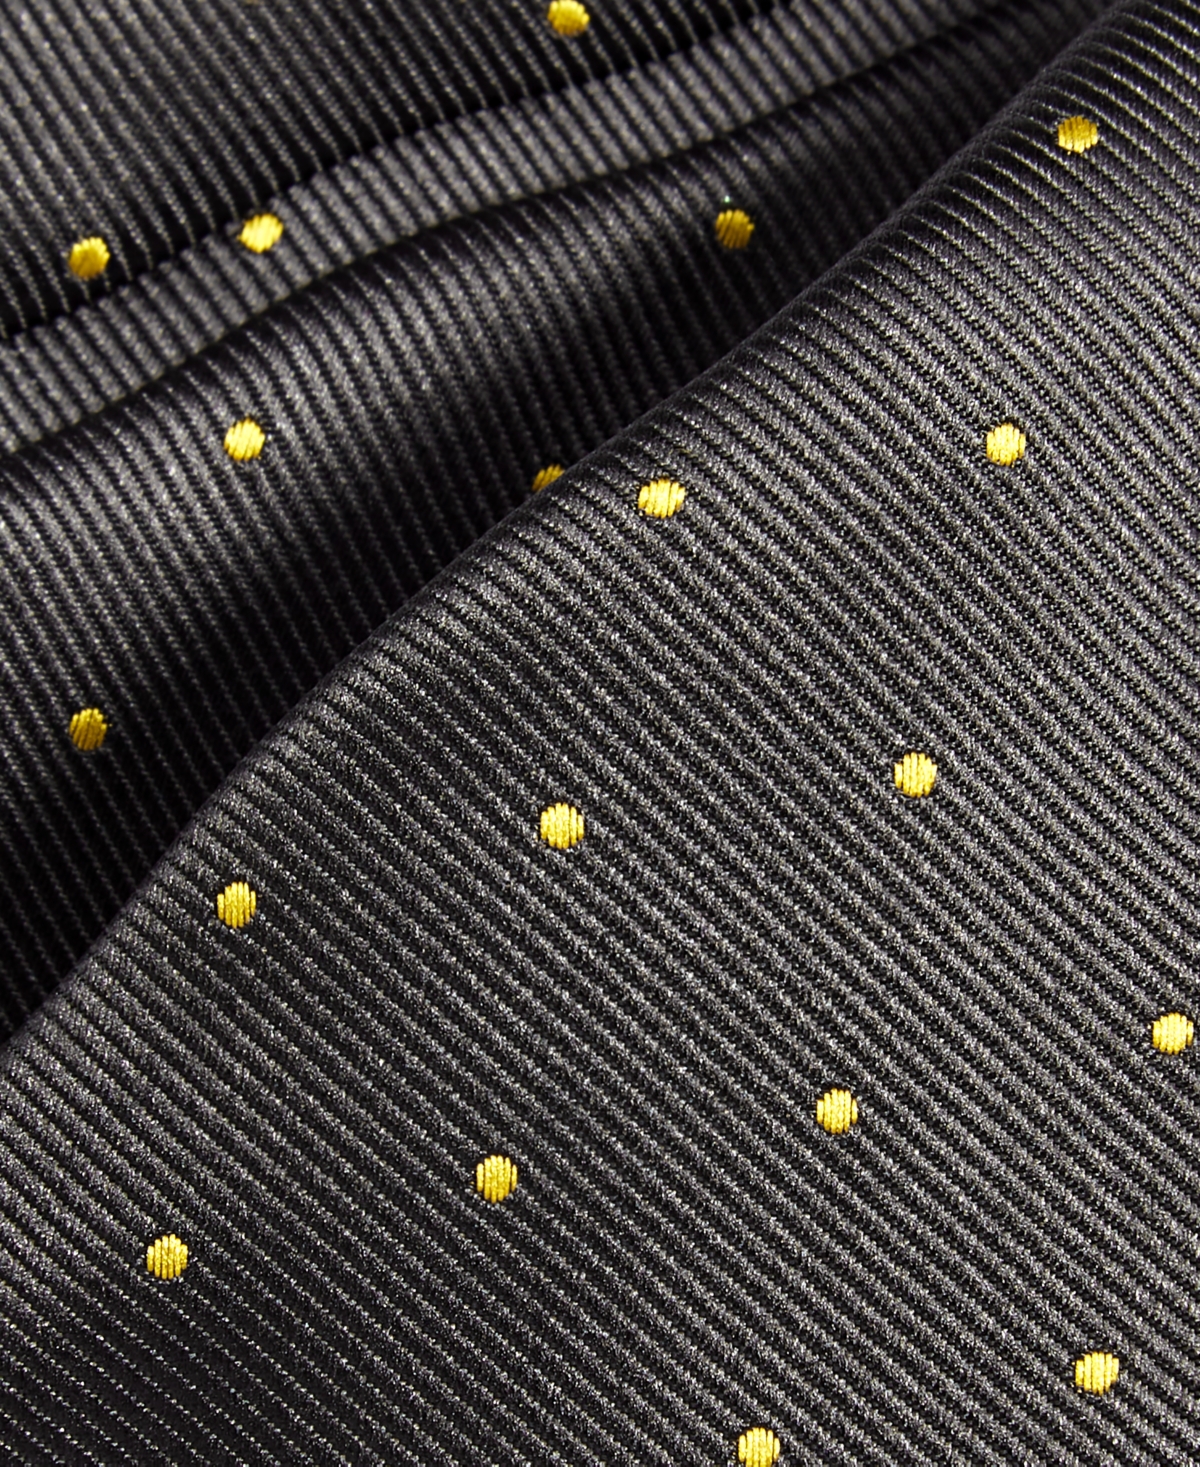 Shop Tayion Collection Men's Black & Gold Dot Tie